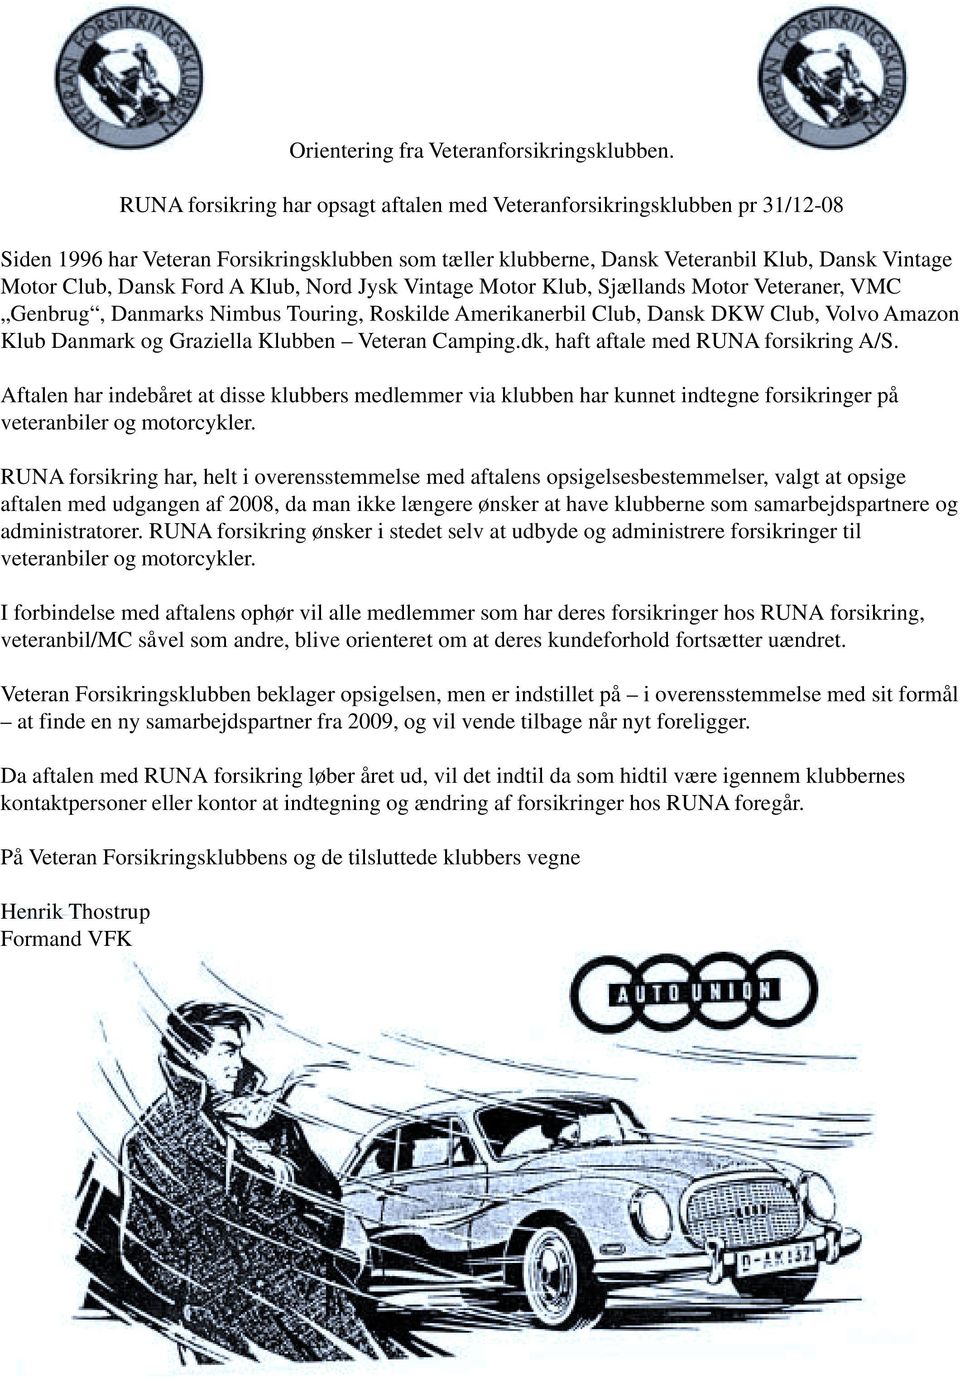 Ford A Klub, Nord Jysk Vintage Motor Klub, Sjællands Motor Veteraner, VMC Genbrug, Danmarks Nimbus Touring, Roskilde Amerikanerbil Club, Dansk DKW Club, Volvo Amazon Klub Danmark og Graziella Klubben